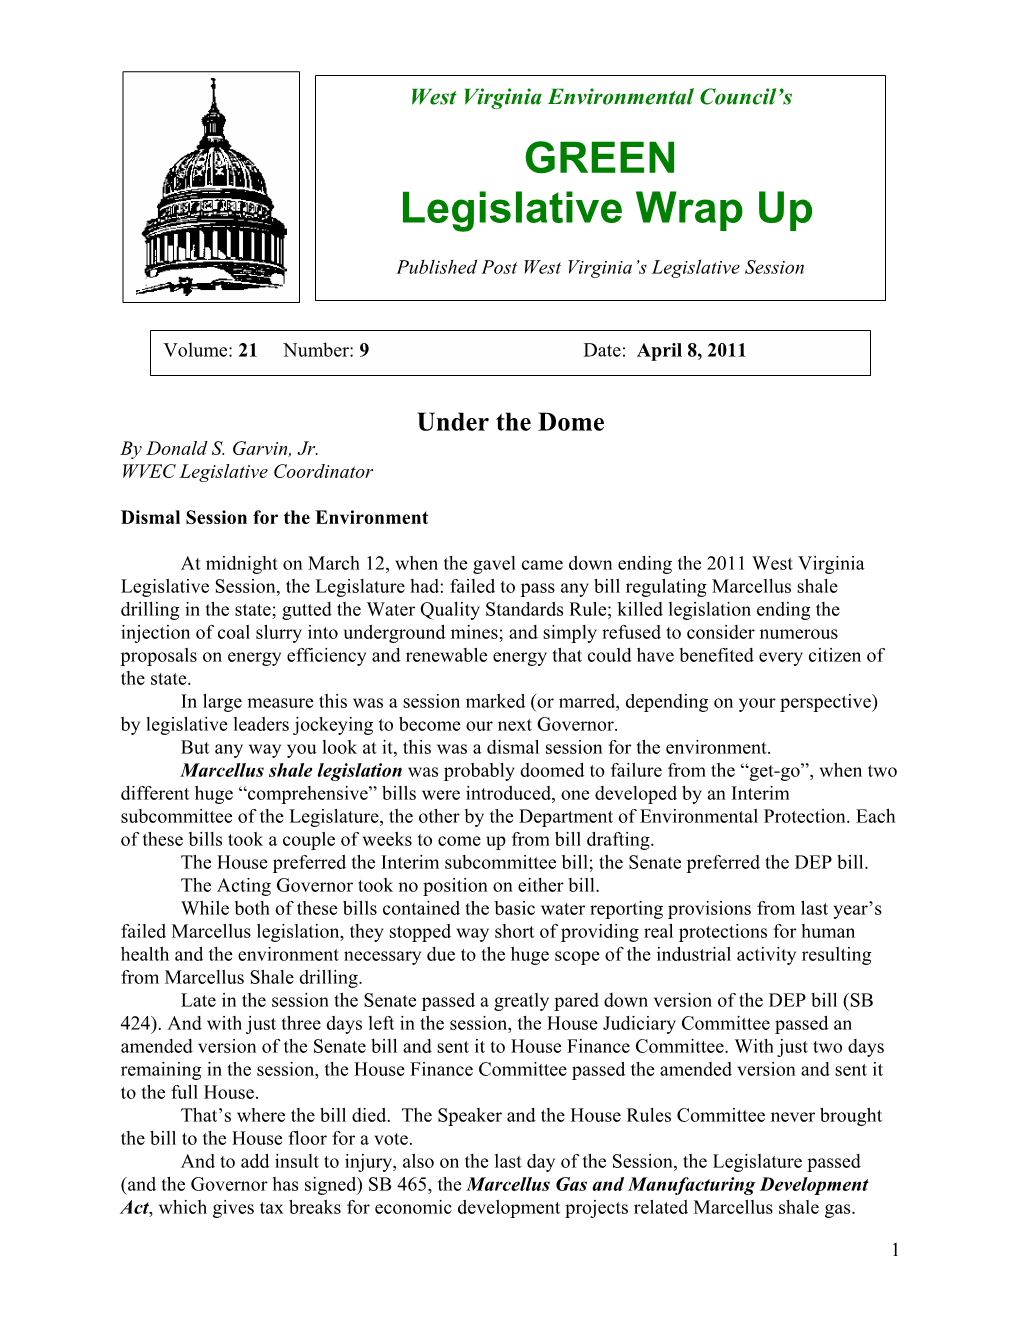 GREEN Legislative Wrap Up